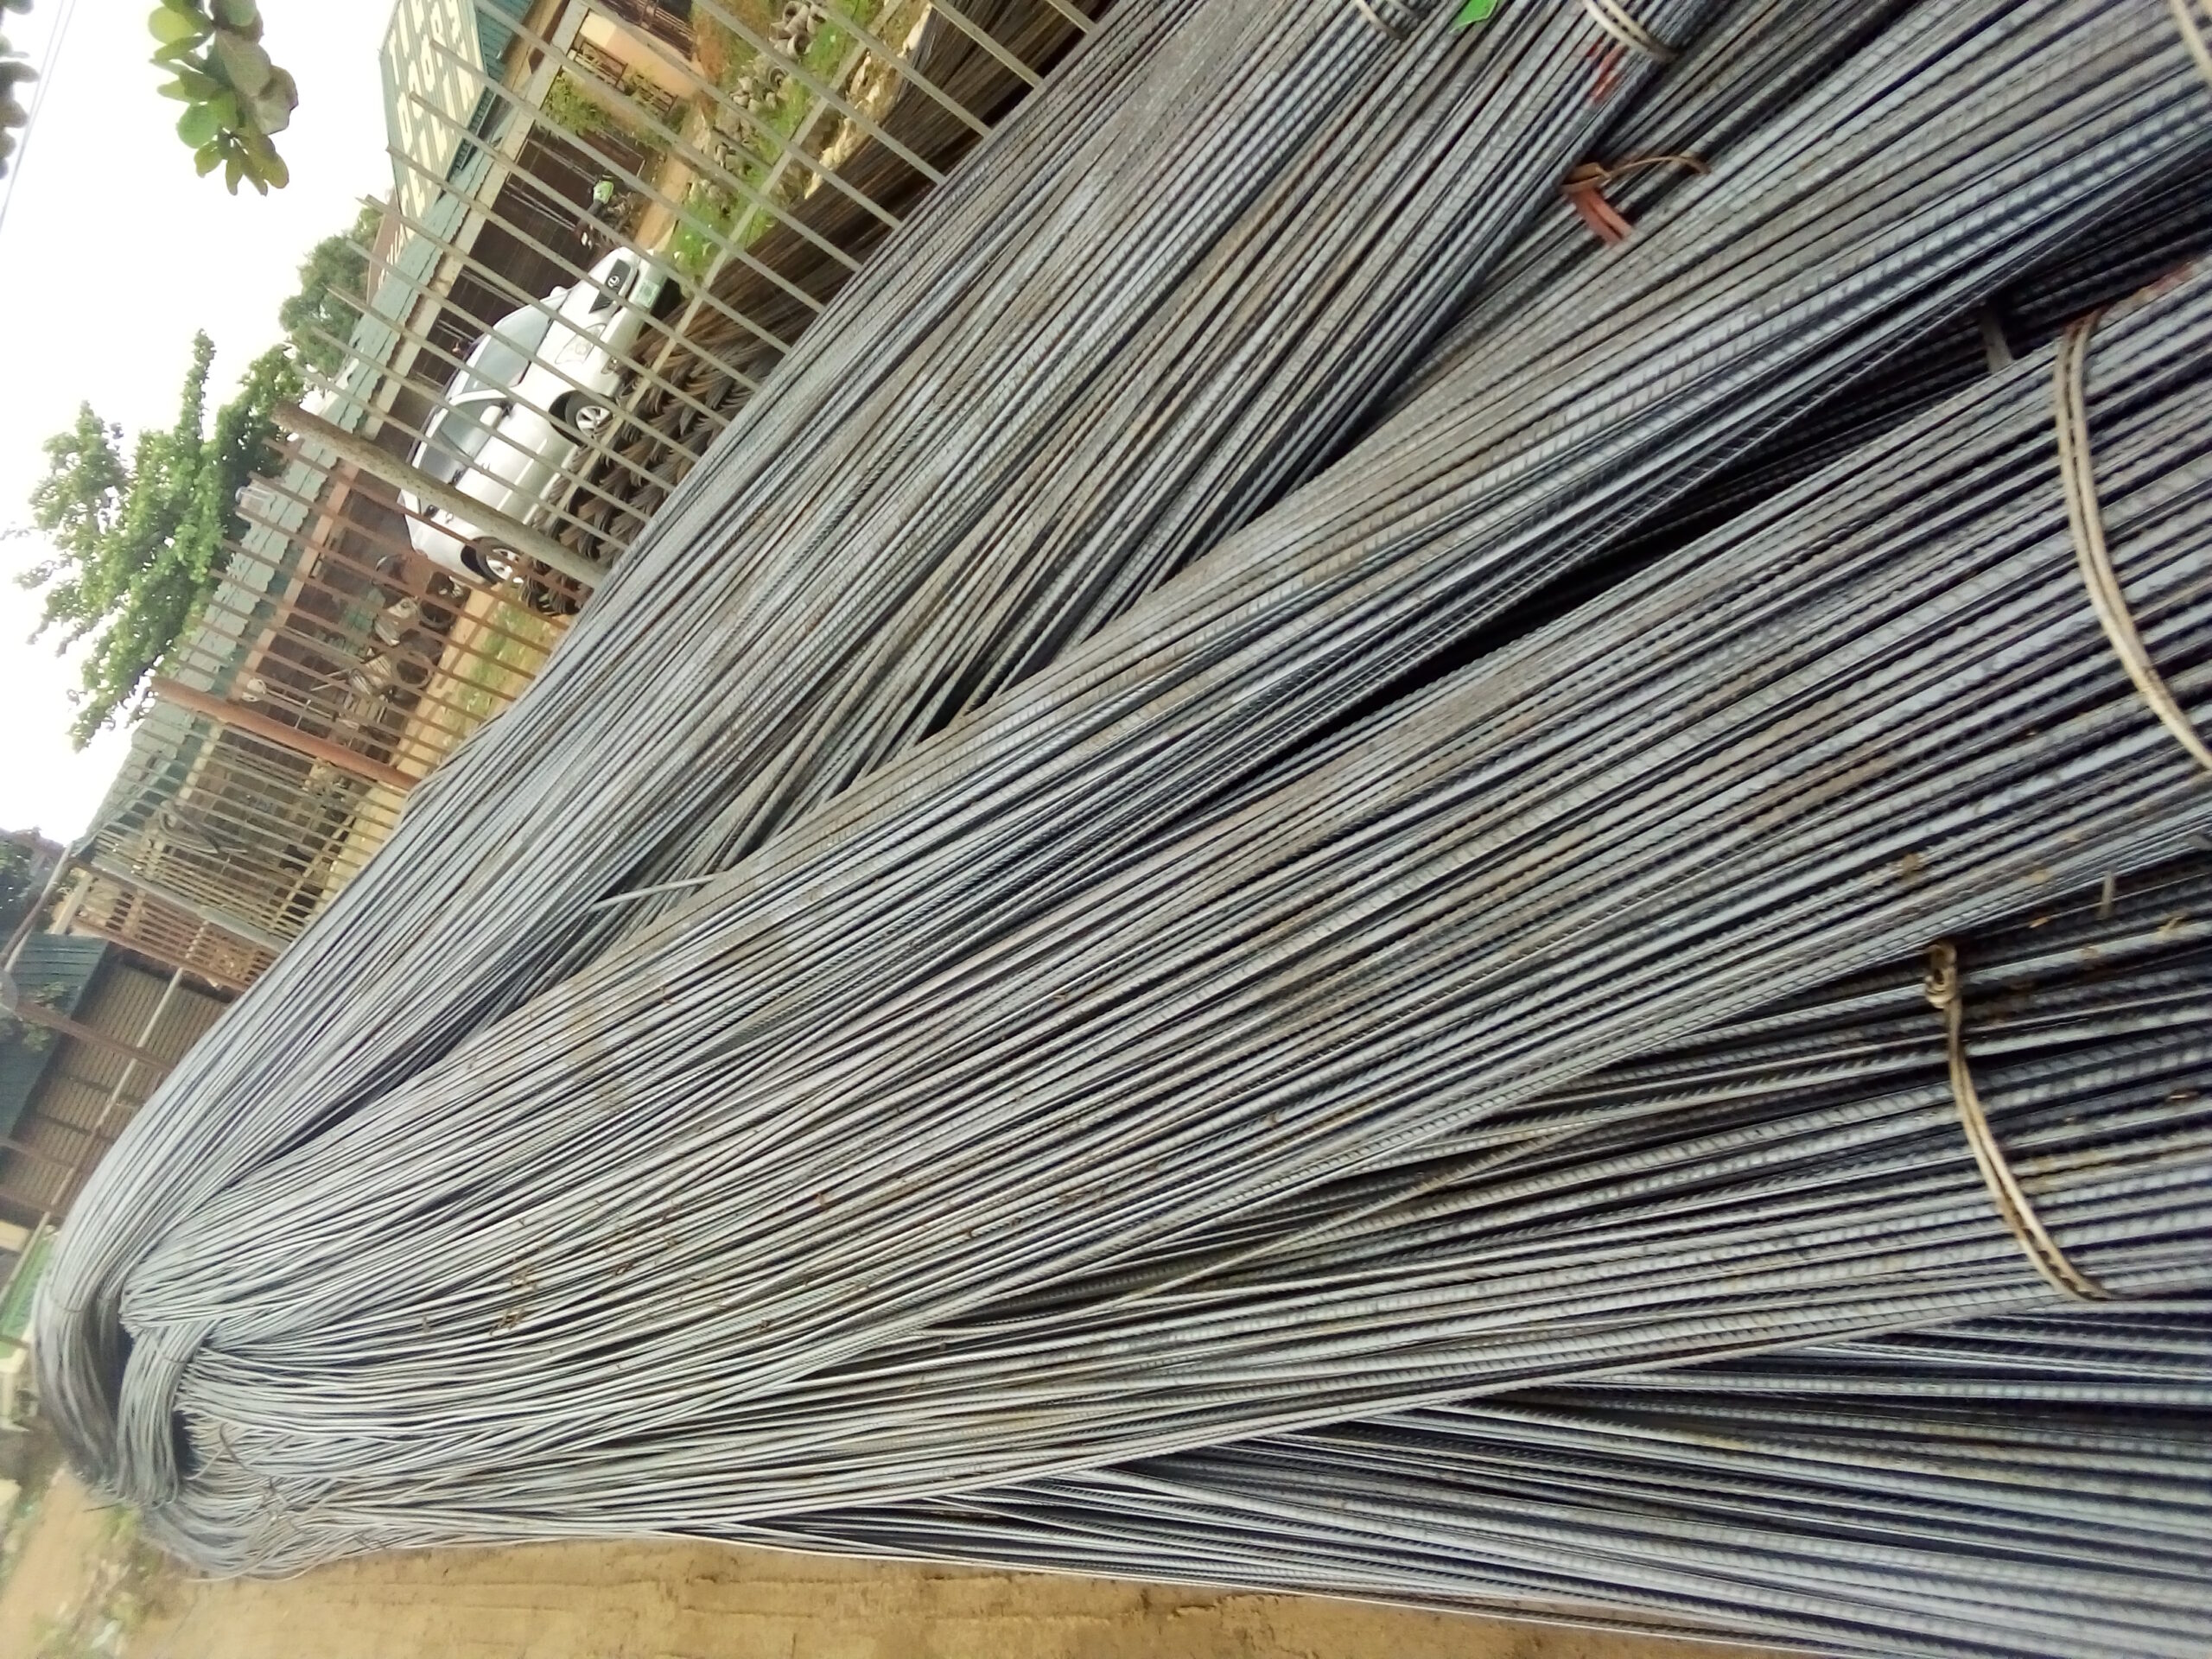 Prices of steel iron rod in Nigeria